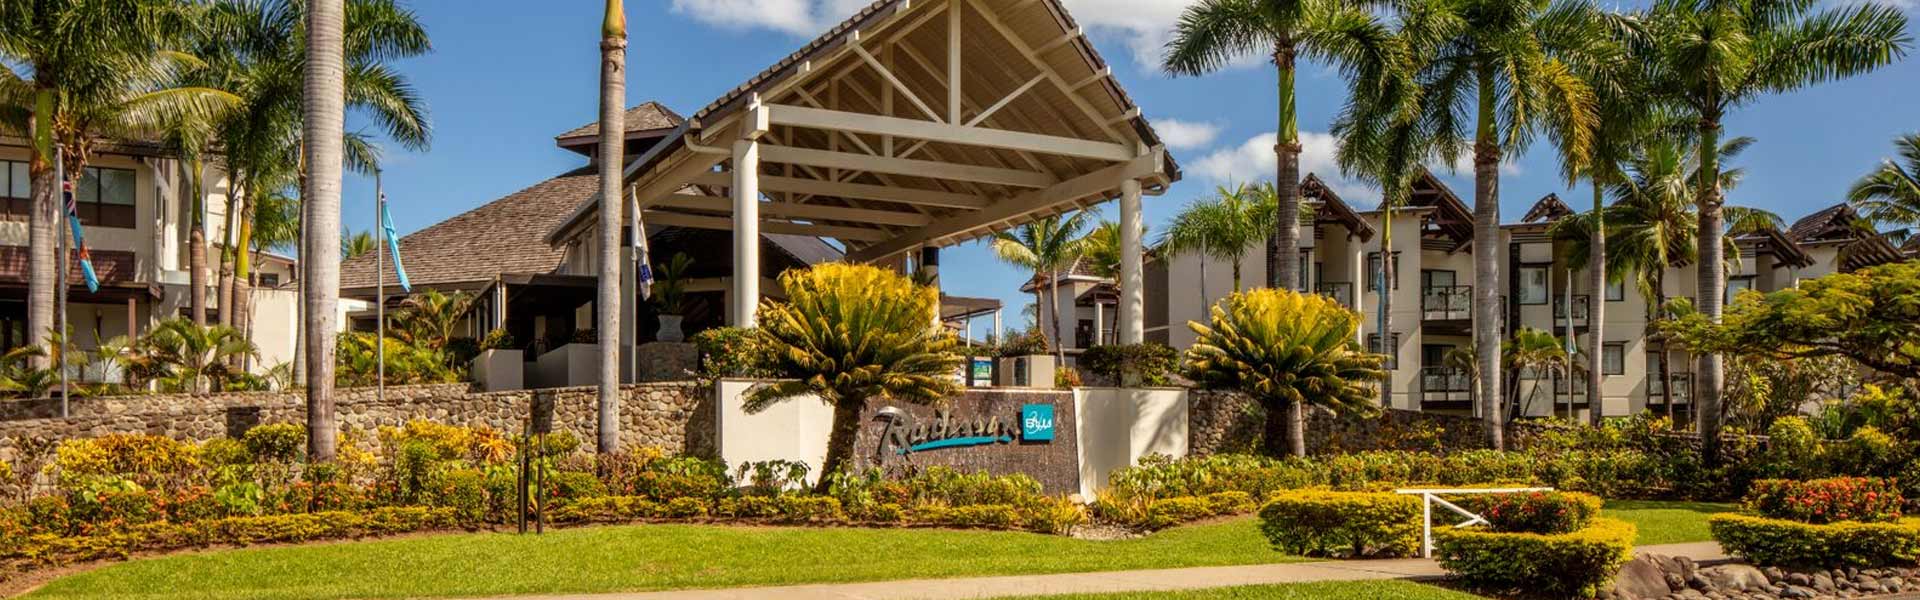 Radisson Blu Resort Fiji Banner Image